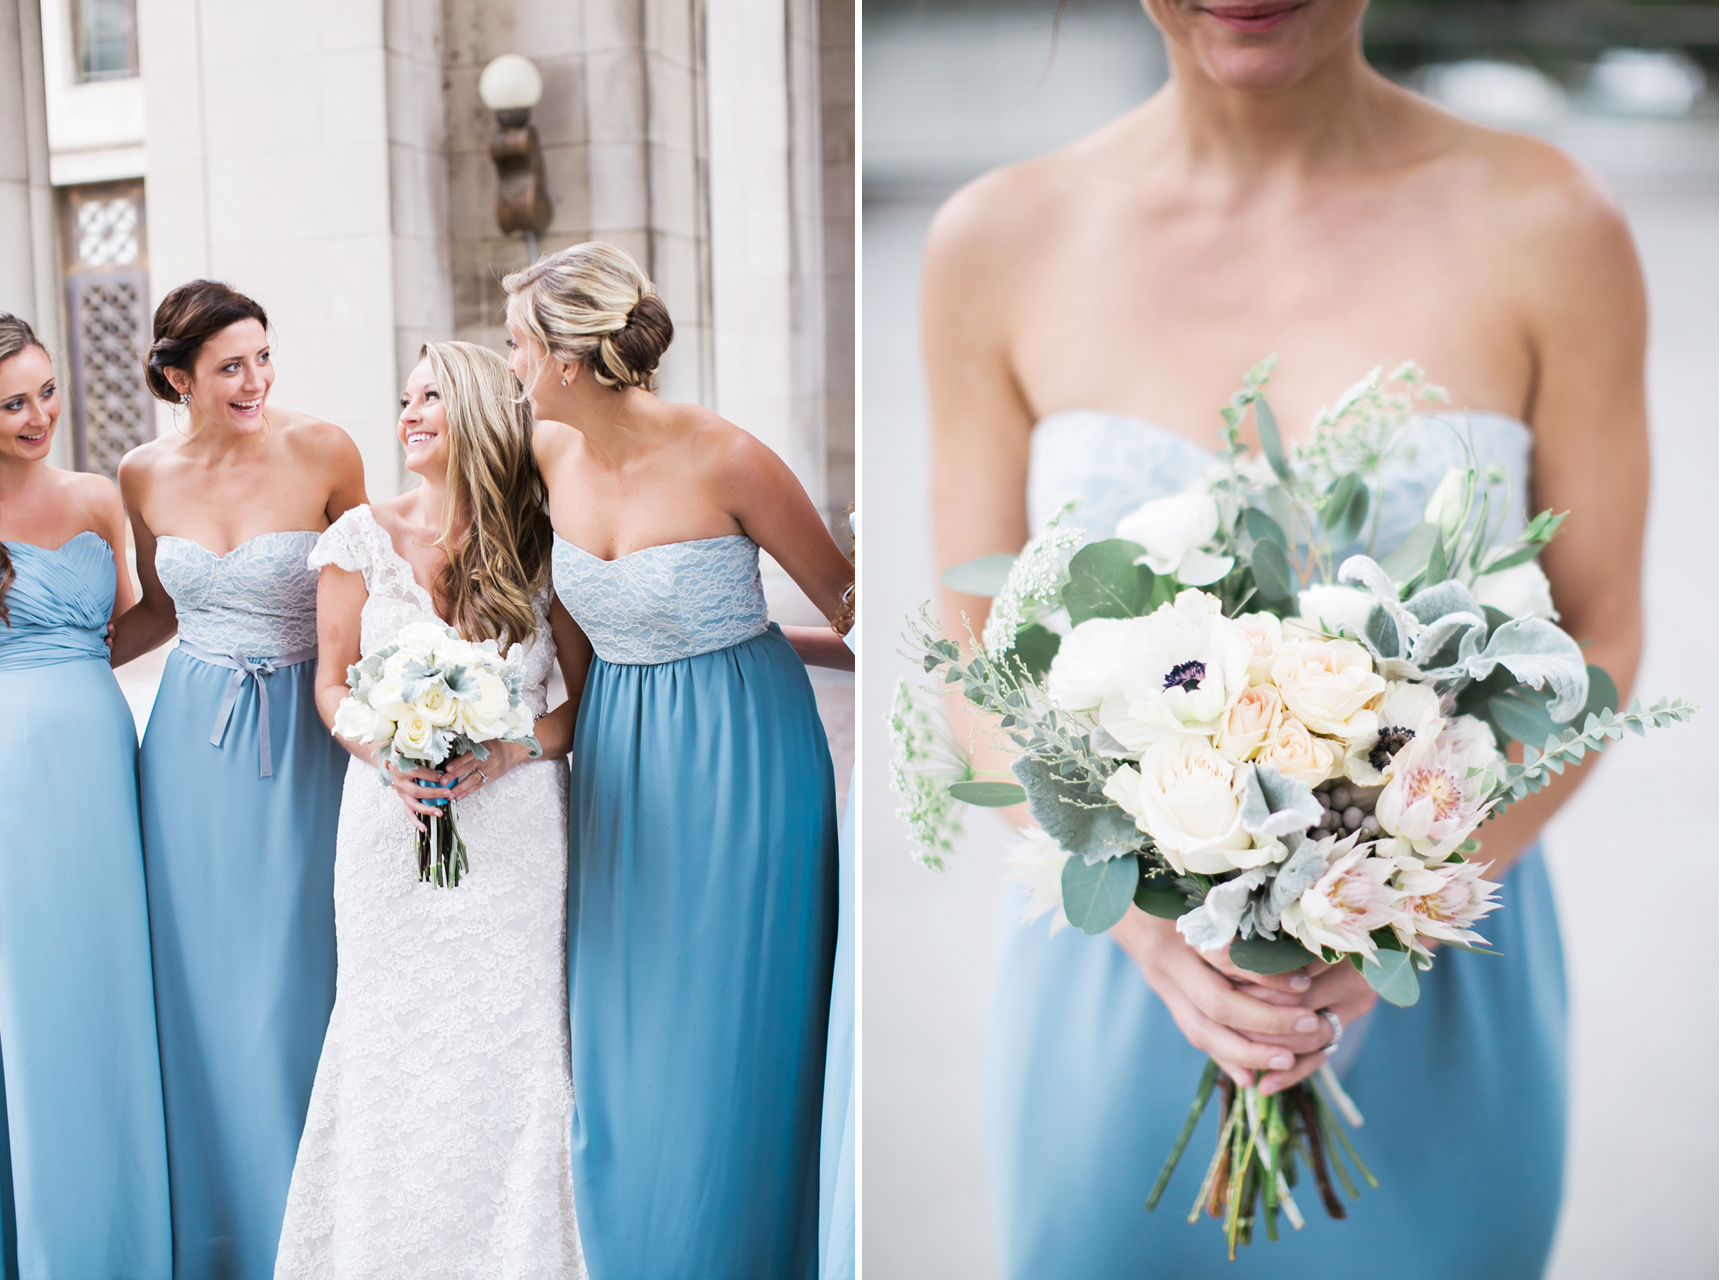 Dusty blue bridesmaid dress